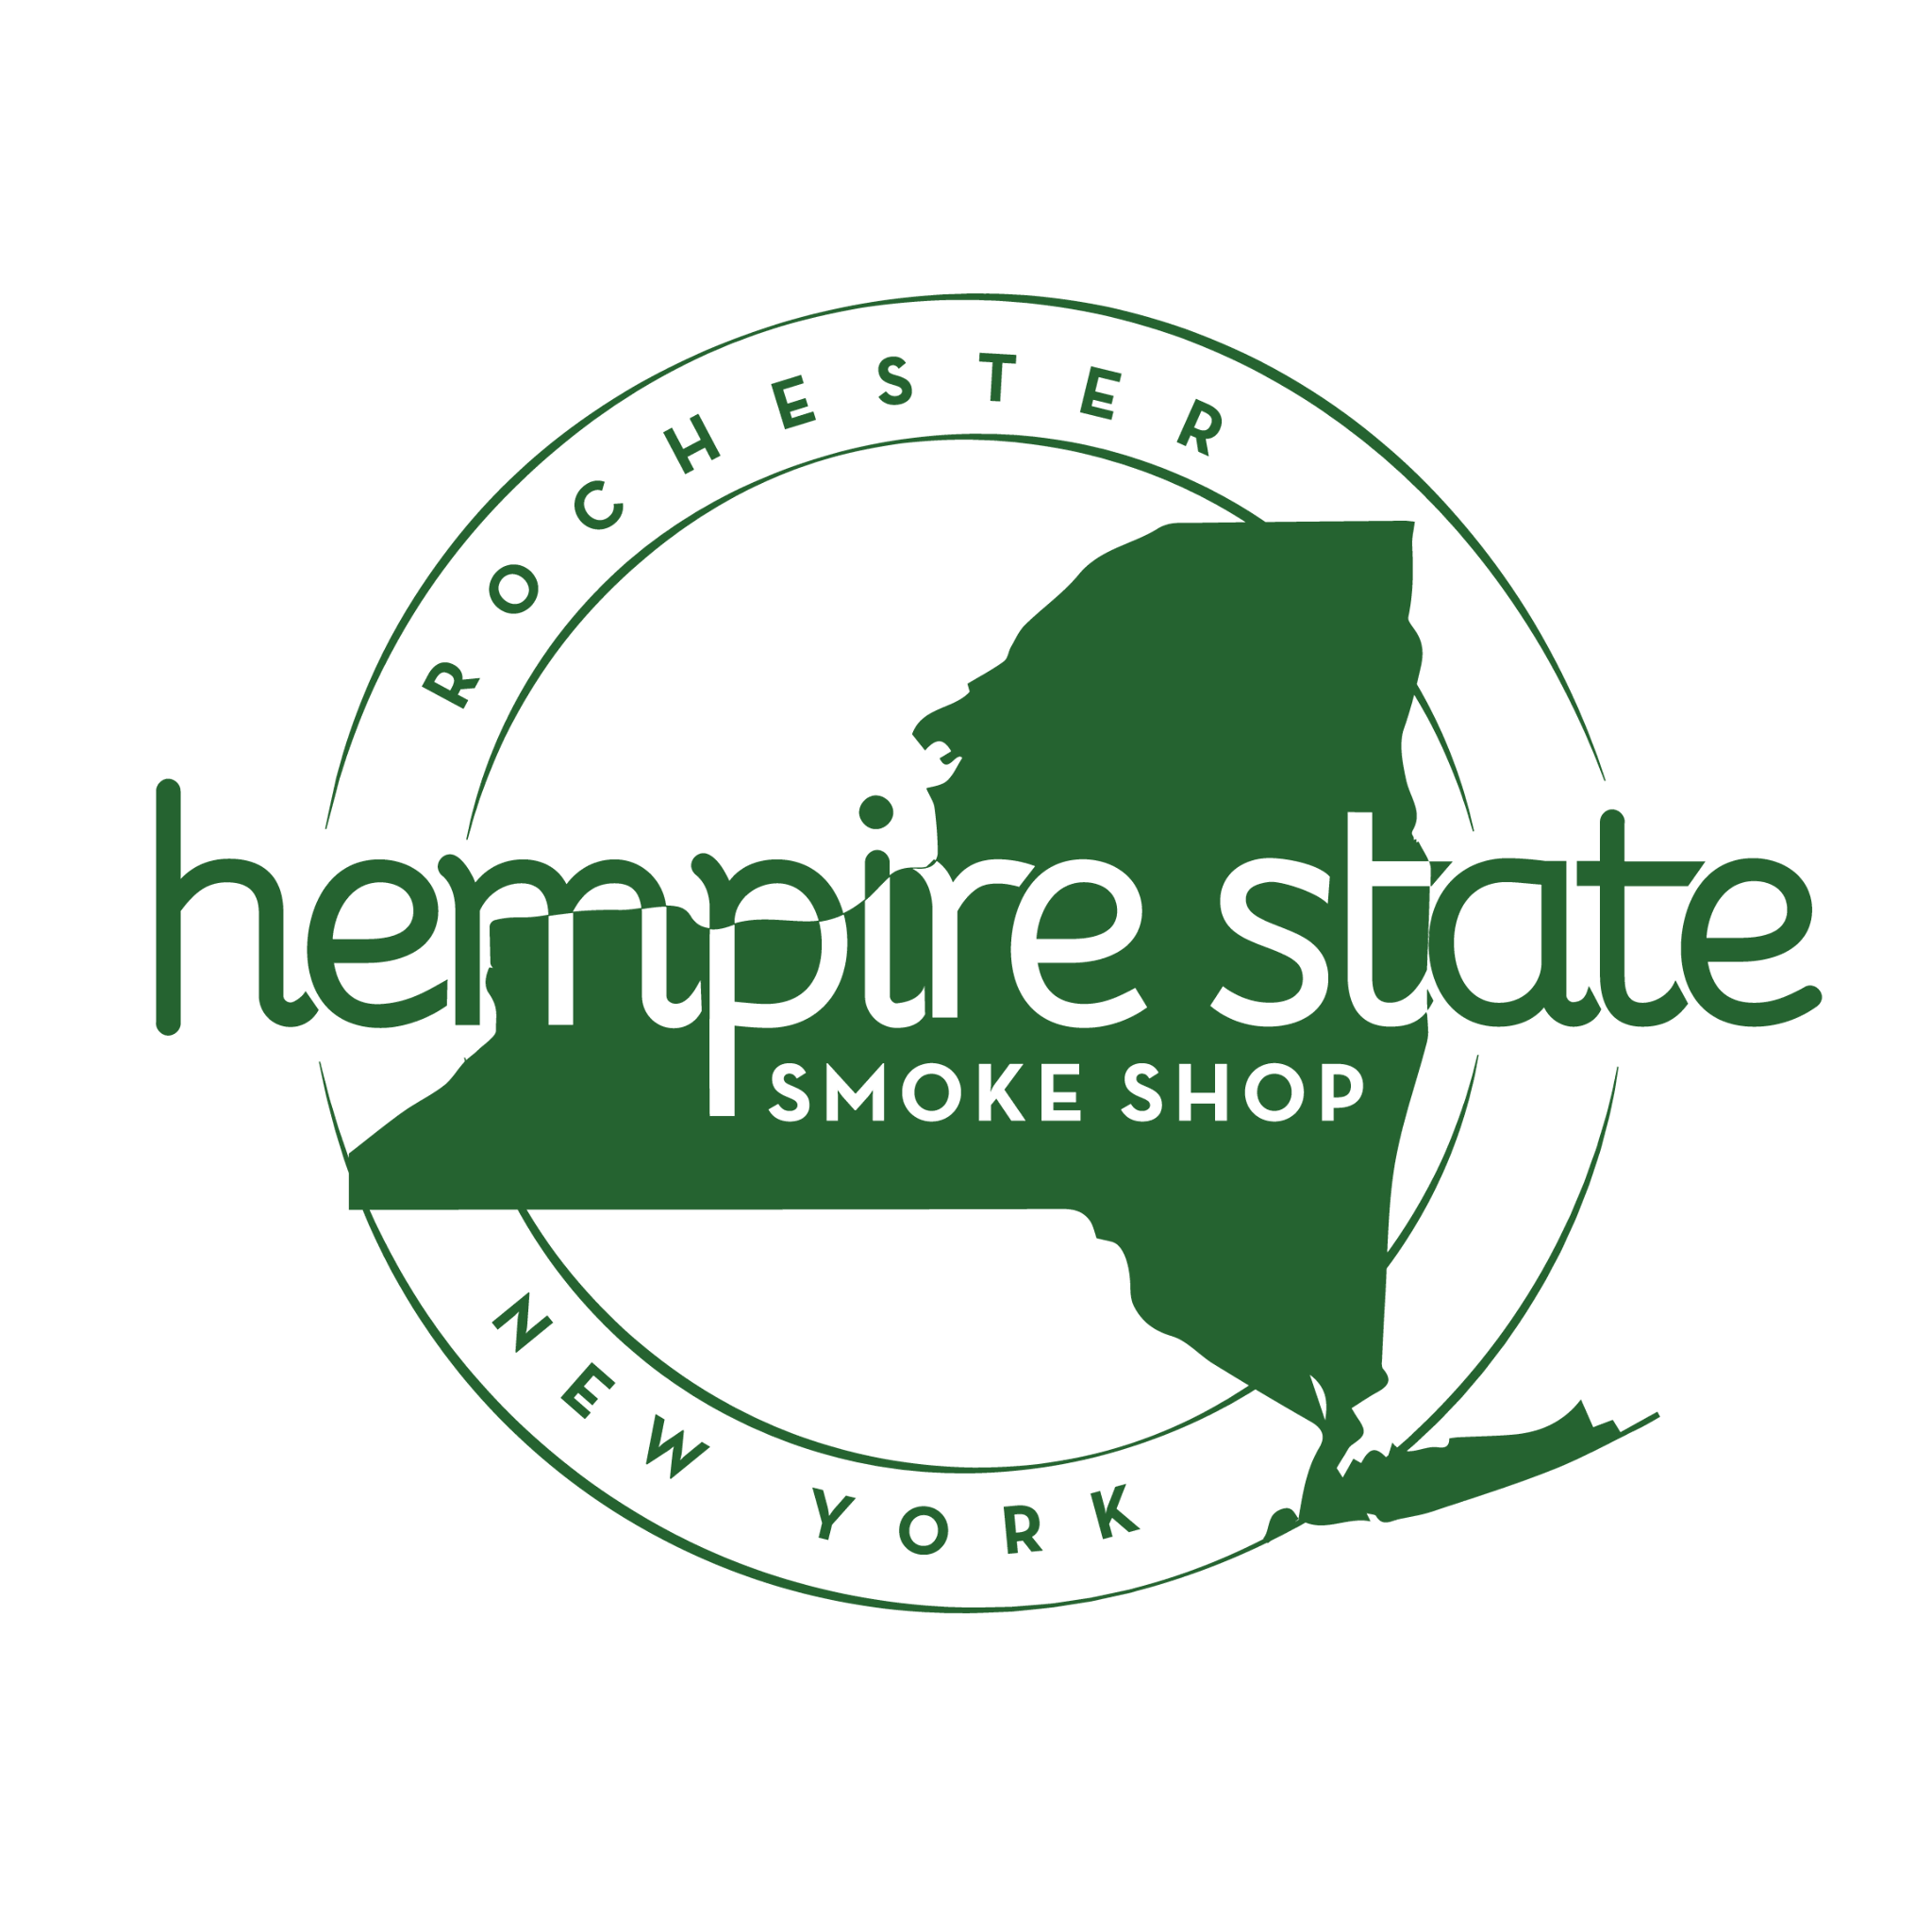 Hempire-State-Smoke-Shop.png